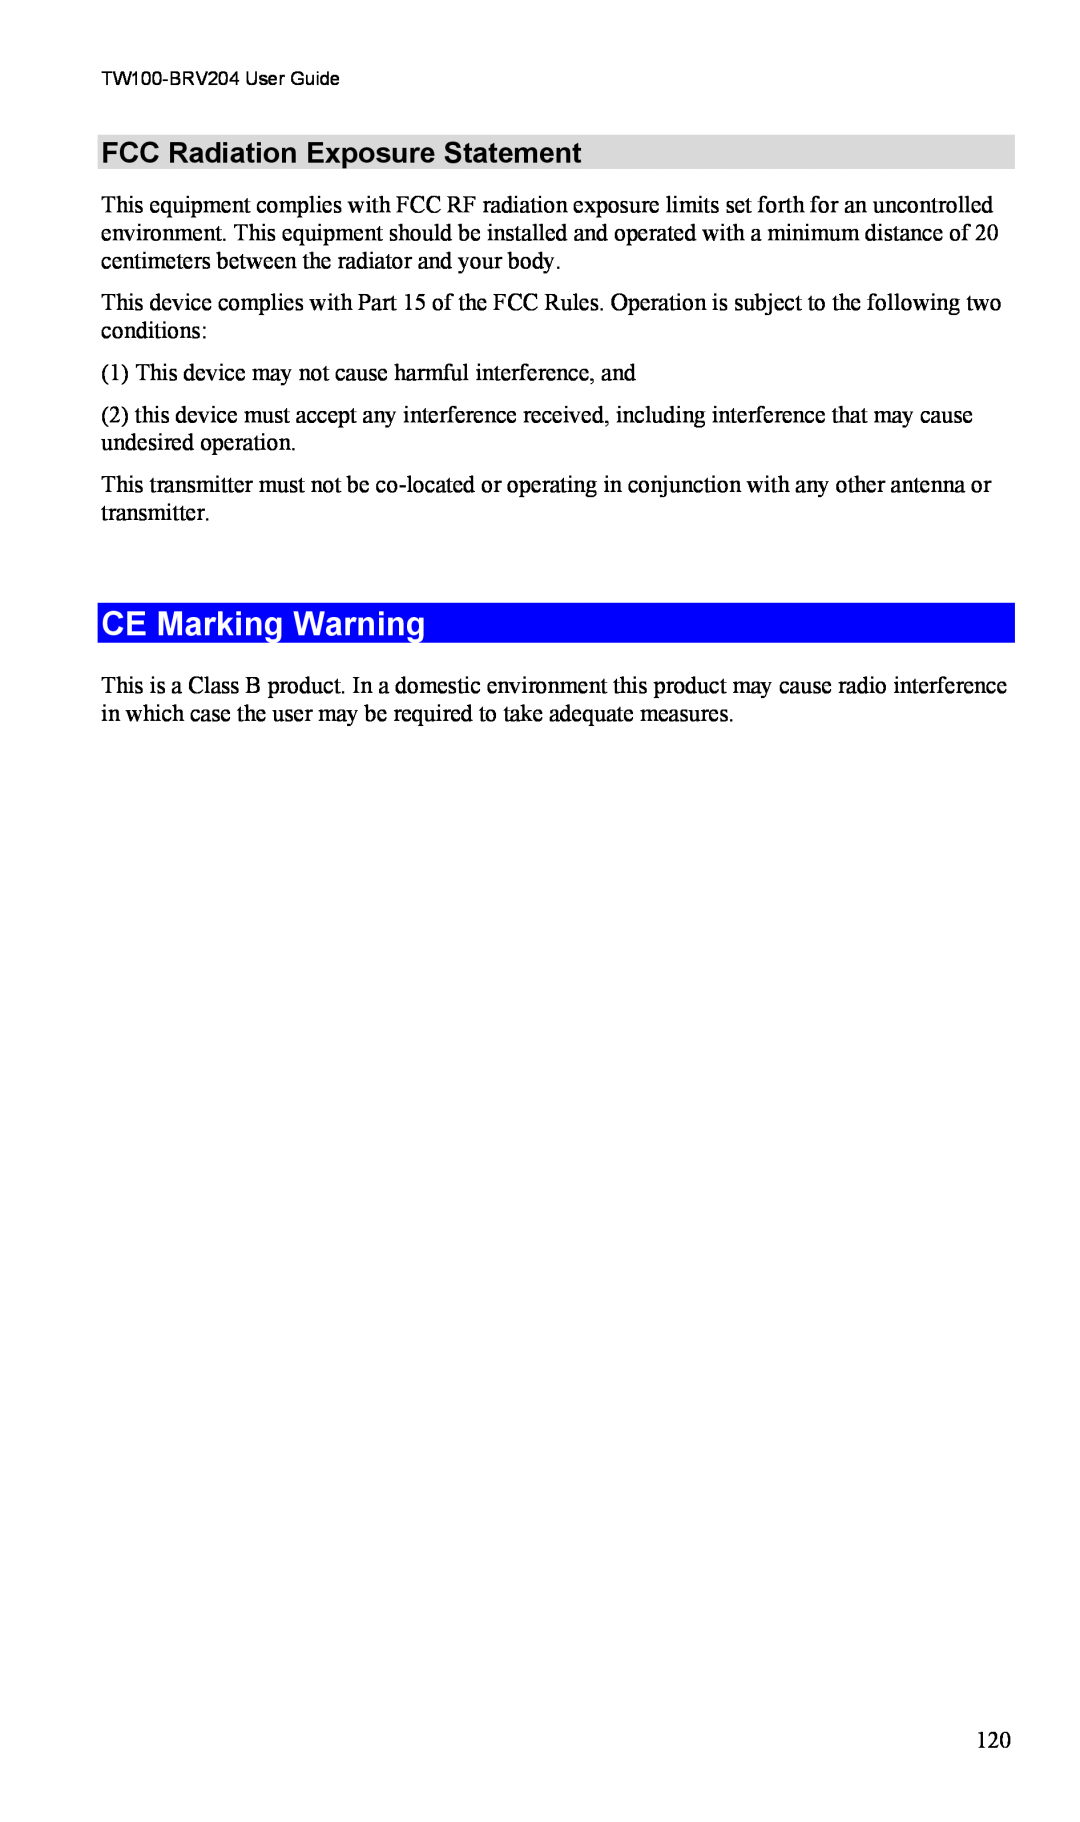 TRENDnet VPN Firewall Router, TW100-BRV204 manual CE Marking Warning, FCC Radiation Exposure Statement 